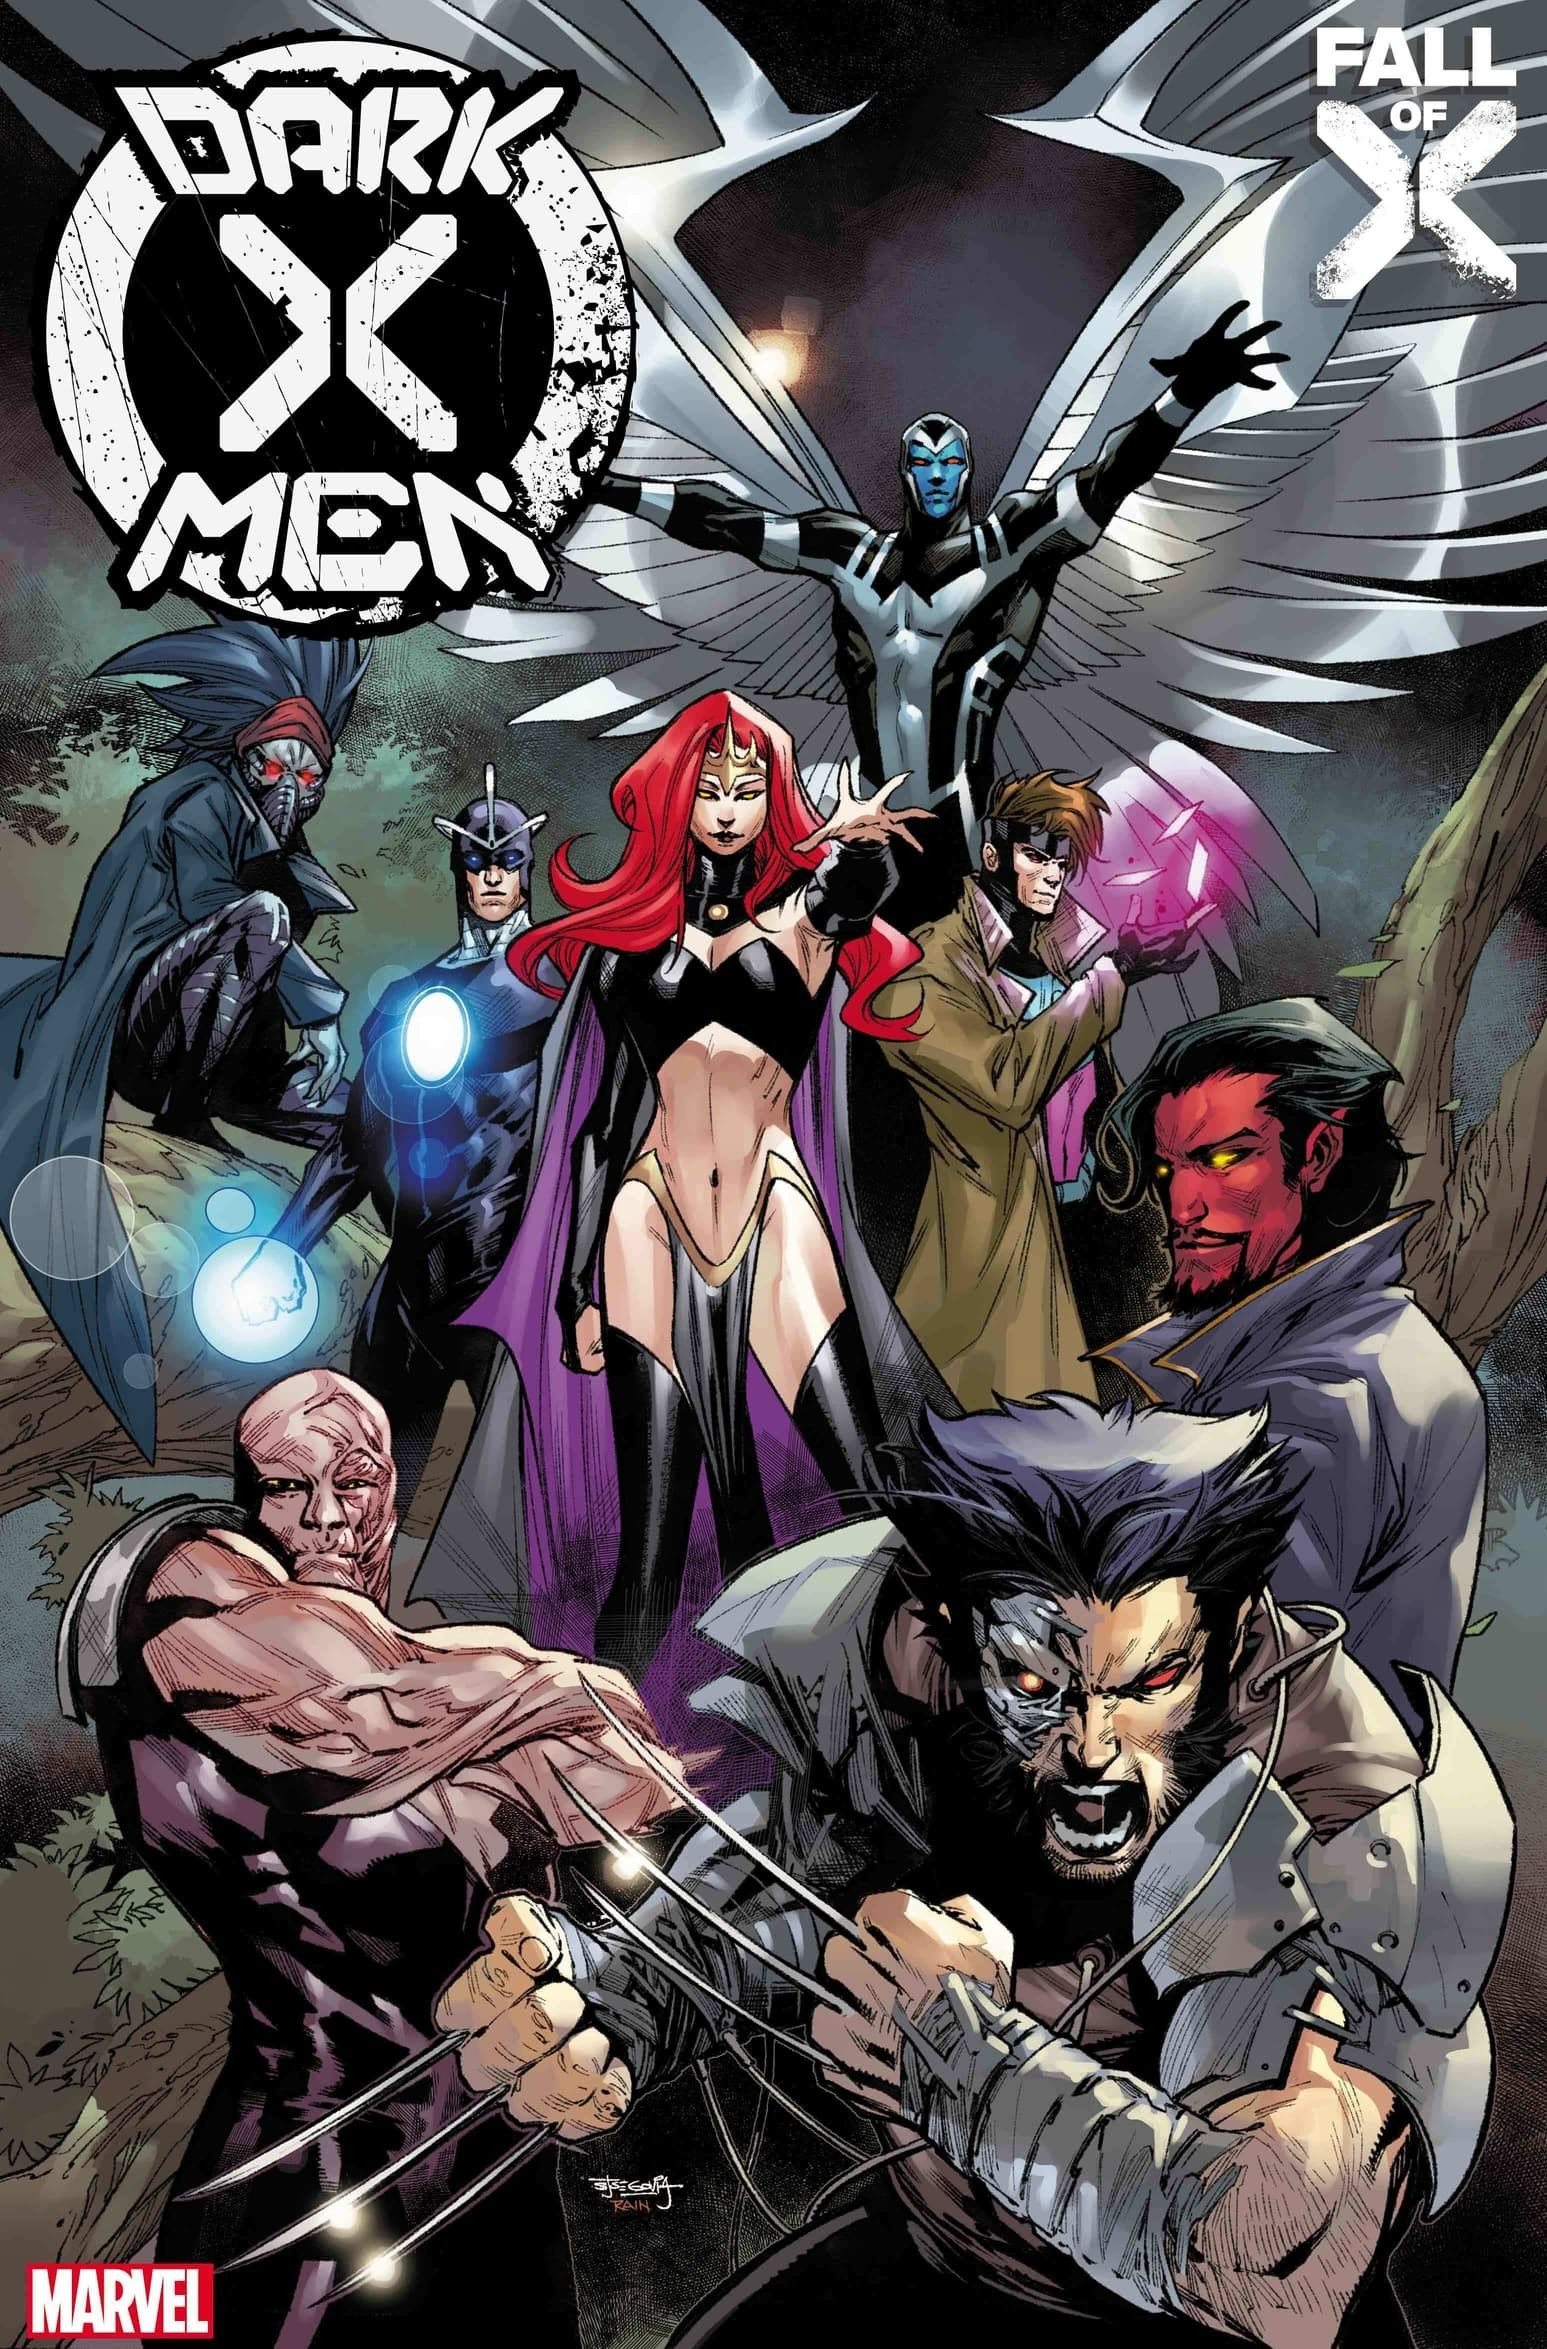 Goblin Queen Leads New Dark X-Men Team Against the Horrors of ‘Fall of X’